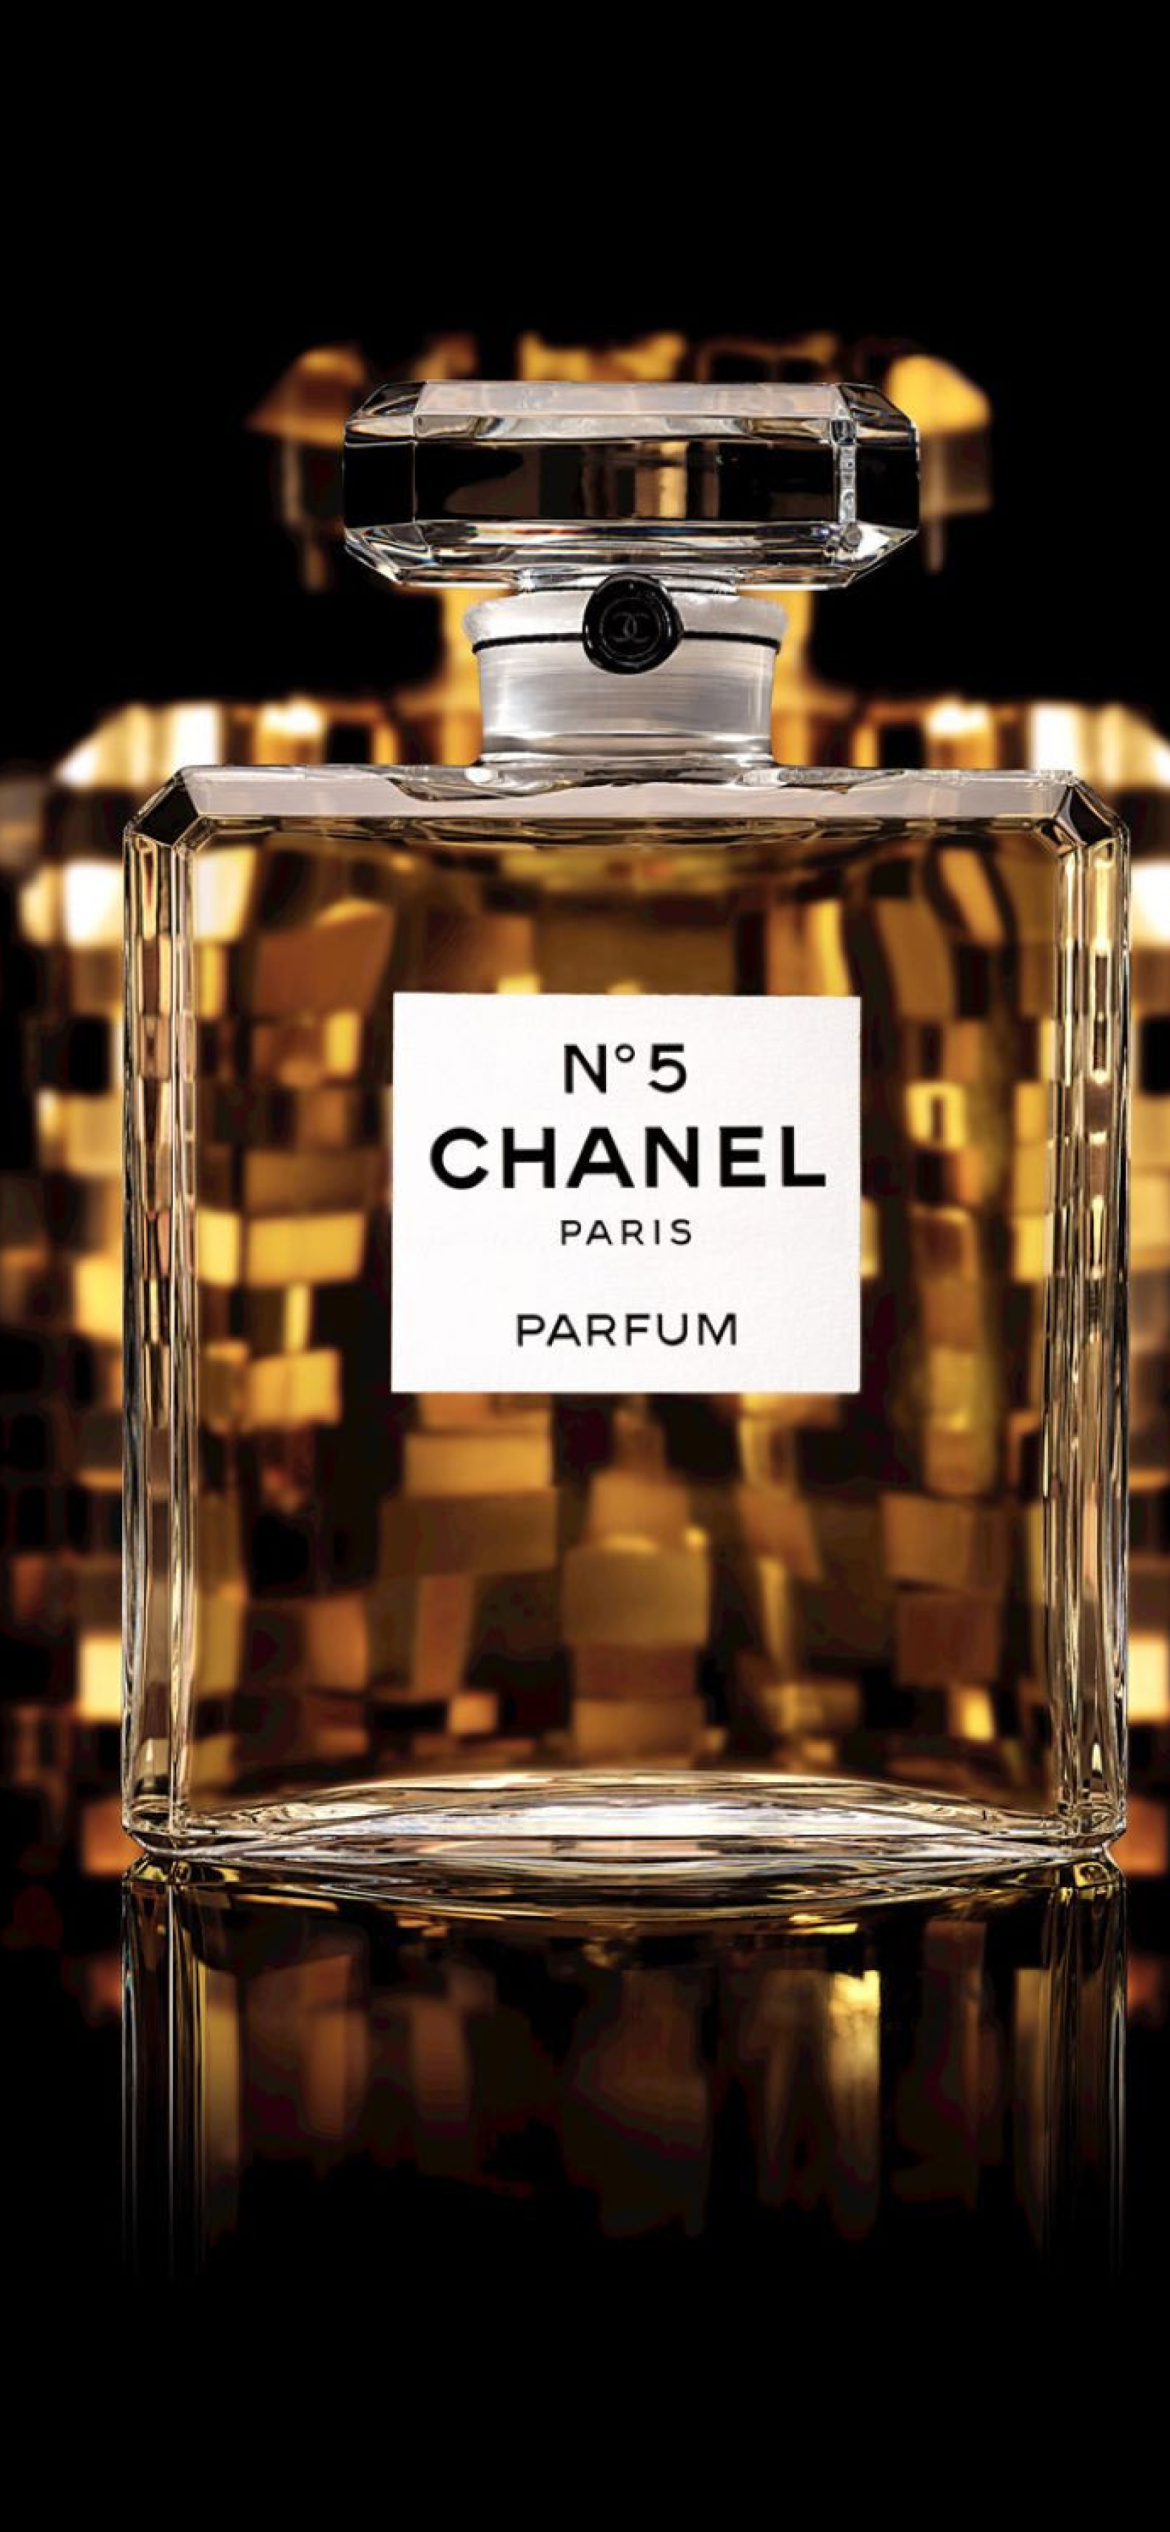 Chanel 5 Fragrance Perfume wallpaper 1170x2532